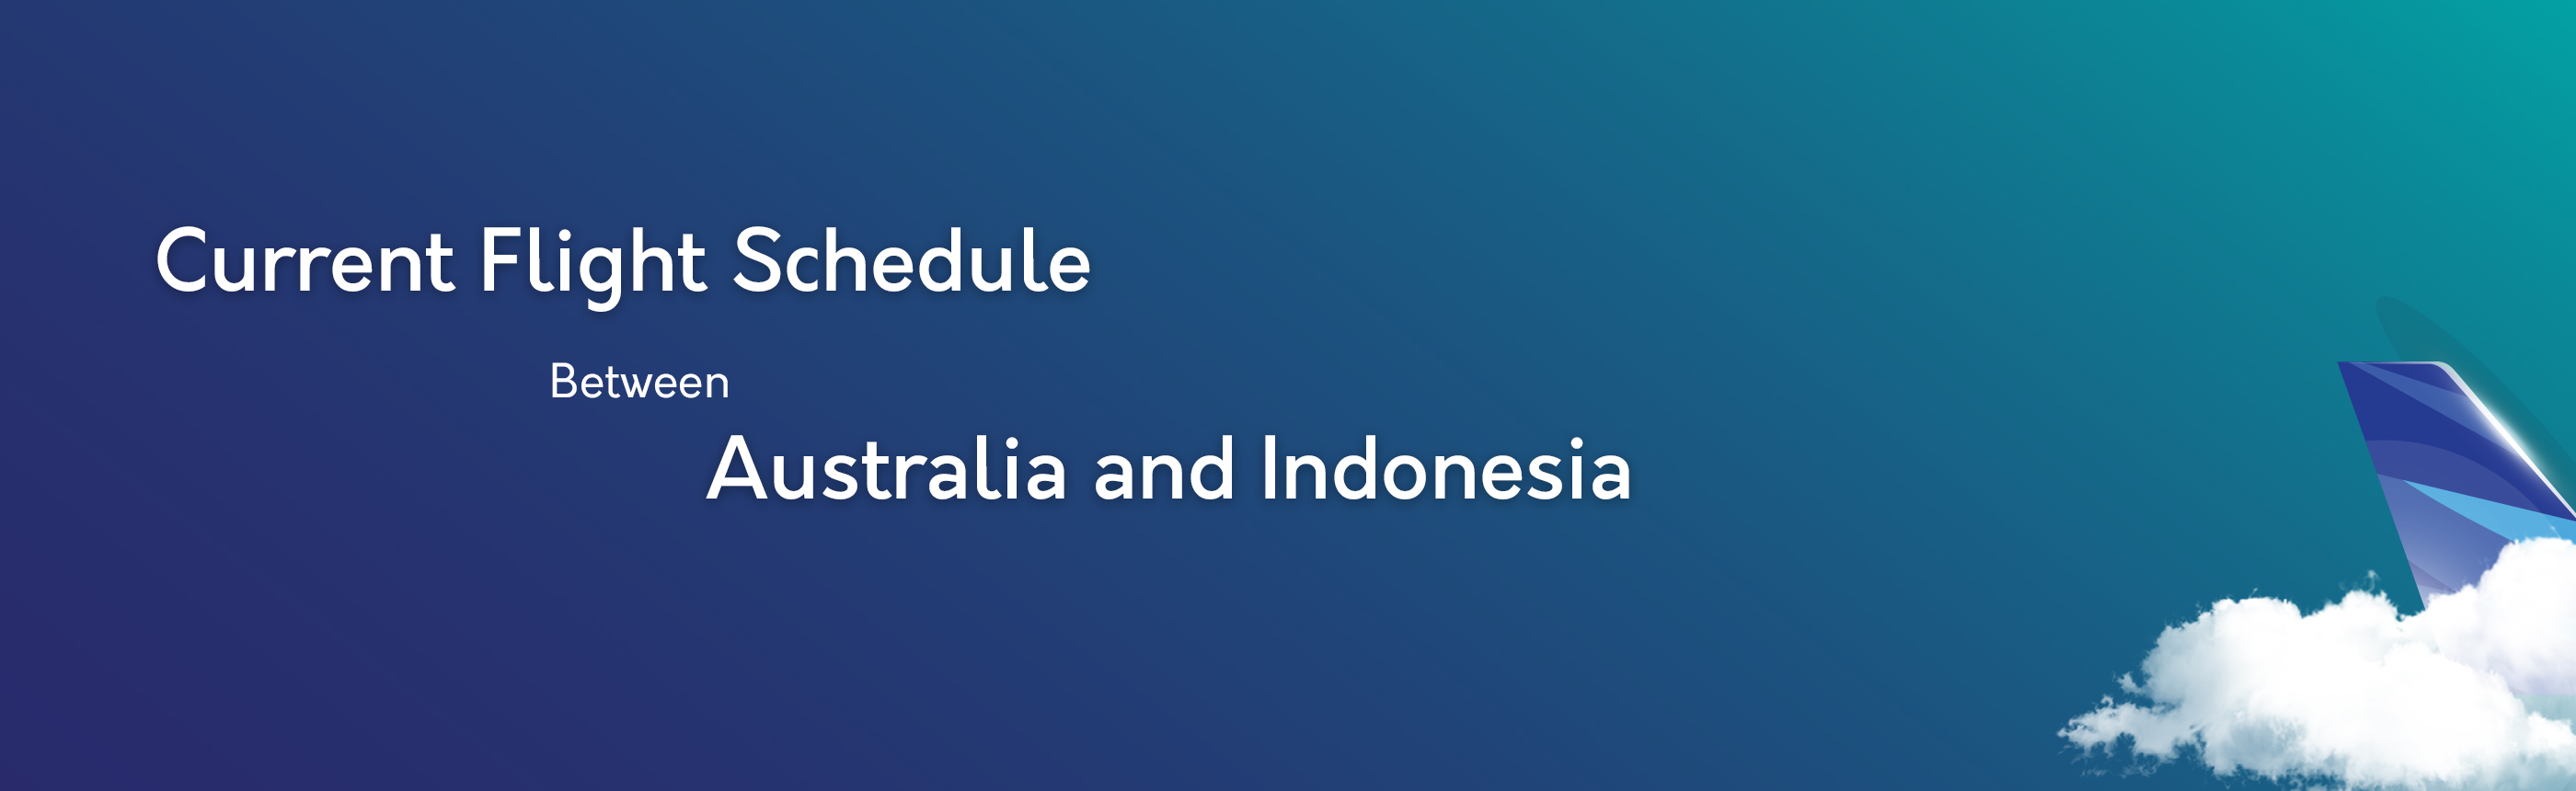 Melbourne Schedules